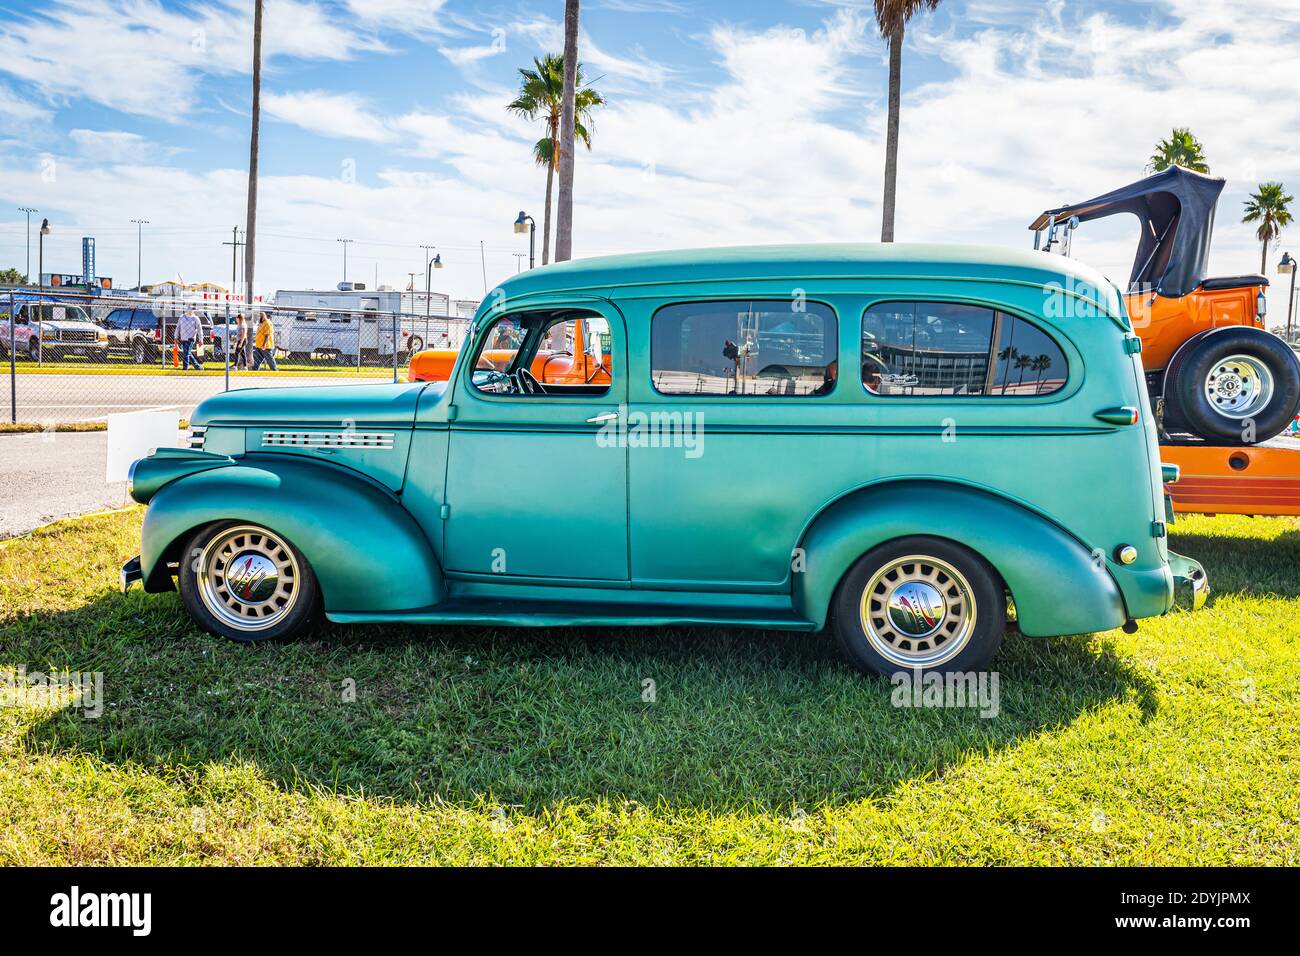 Daytona Beach, FL - November 27, 2020: 1941 Chevrolet CarryAll Suburban at a local car show. Stock Photo